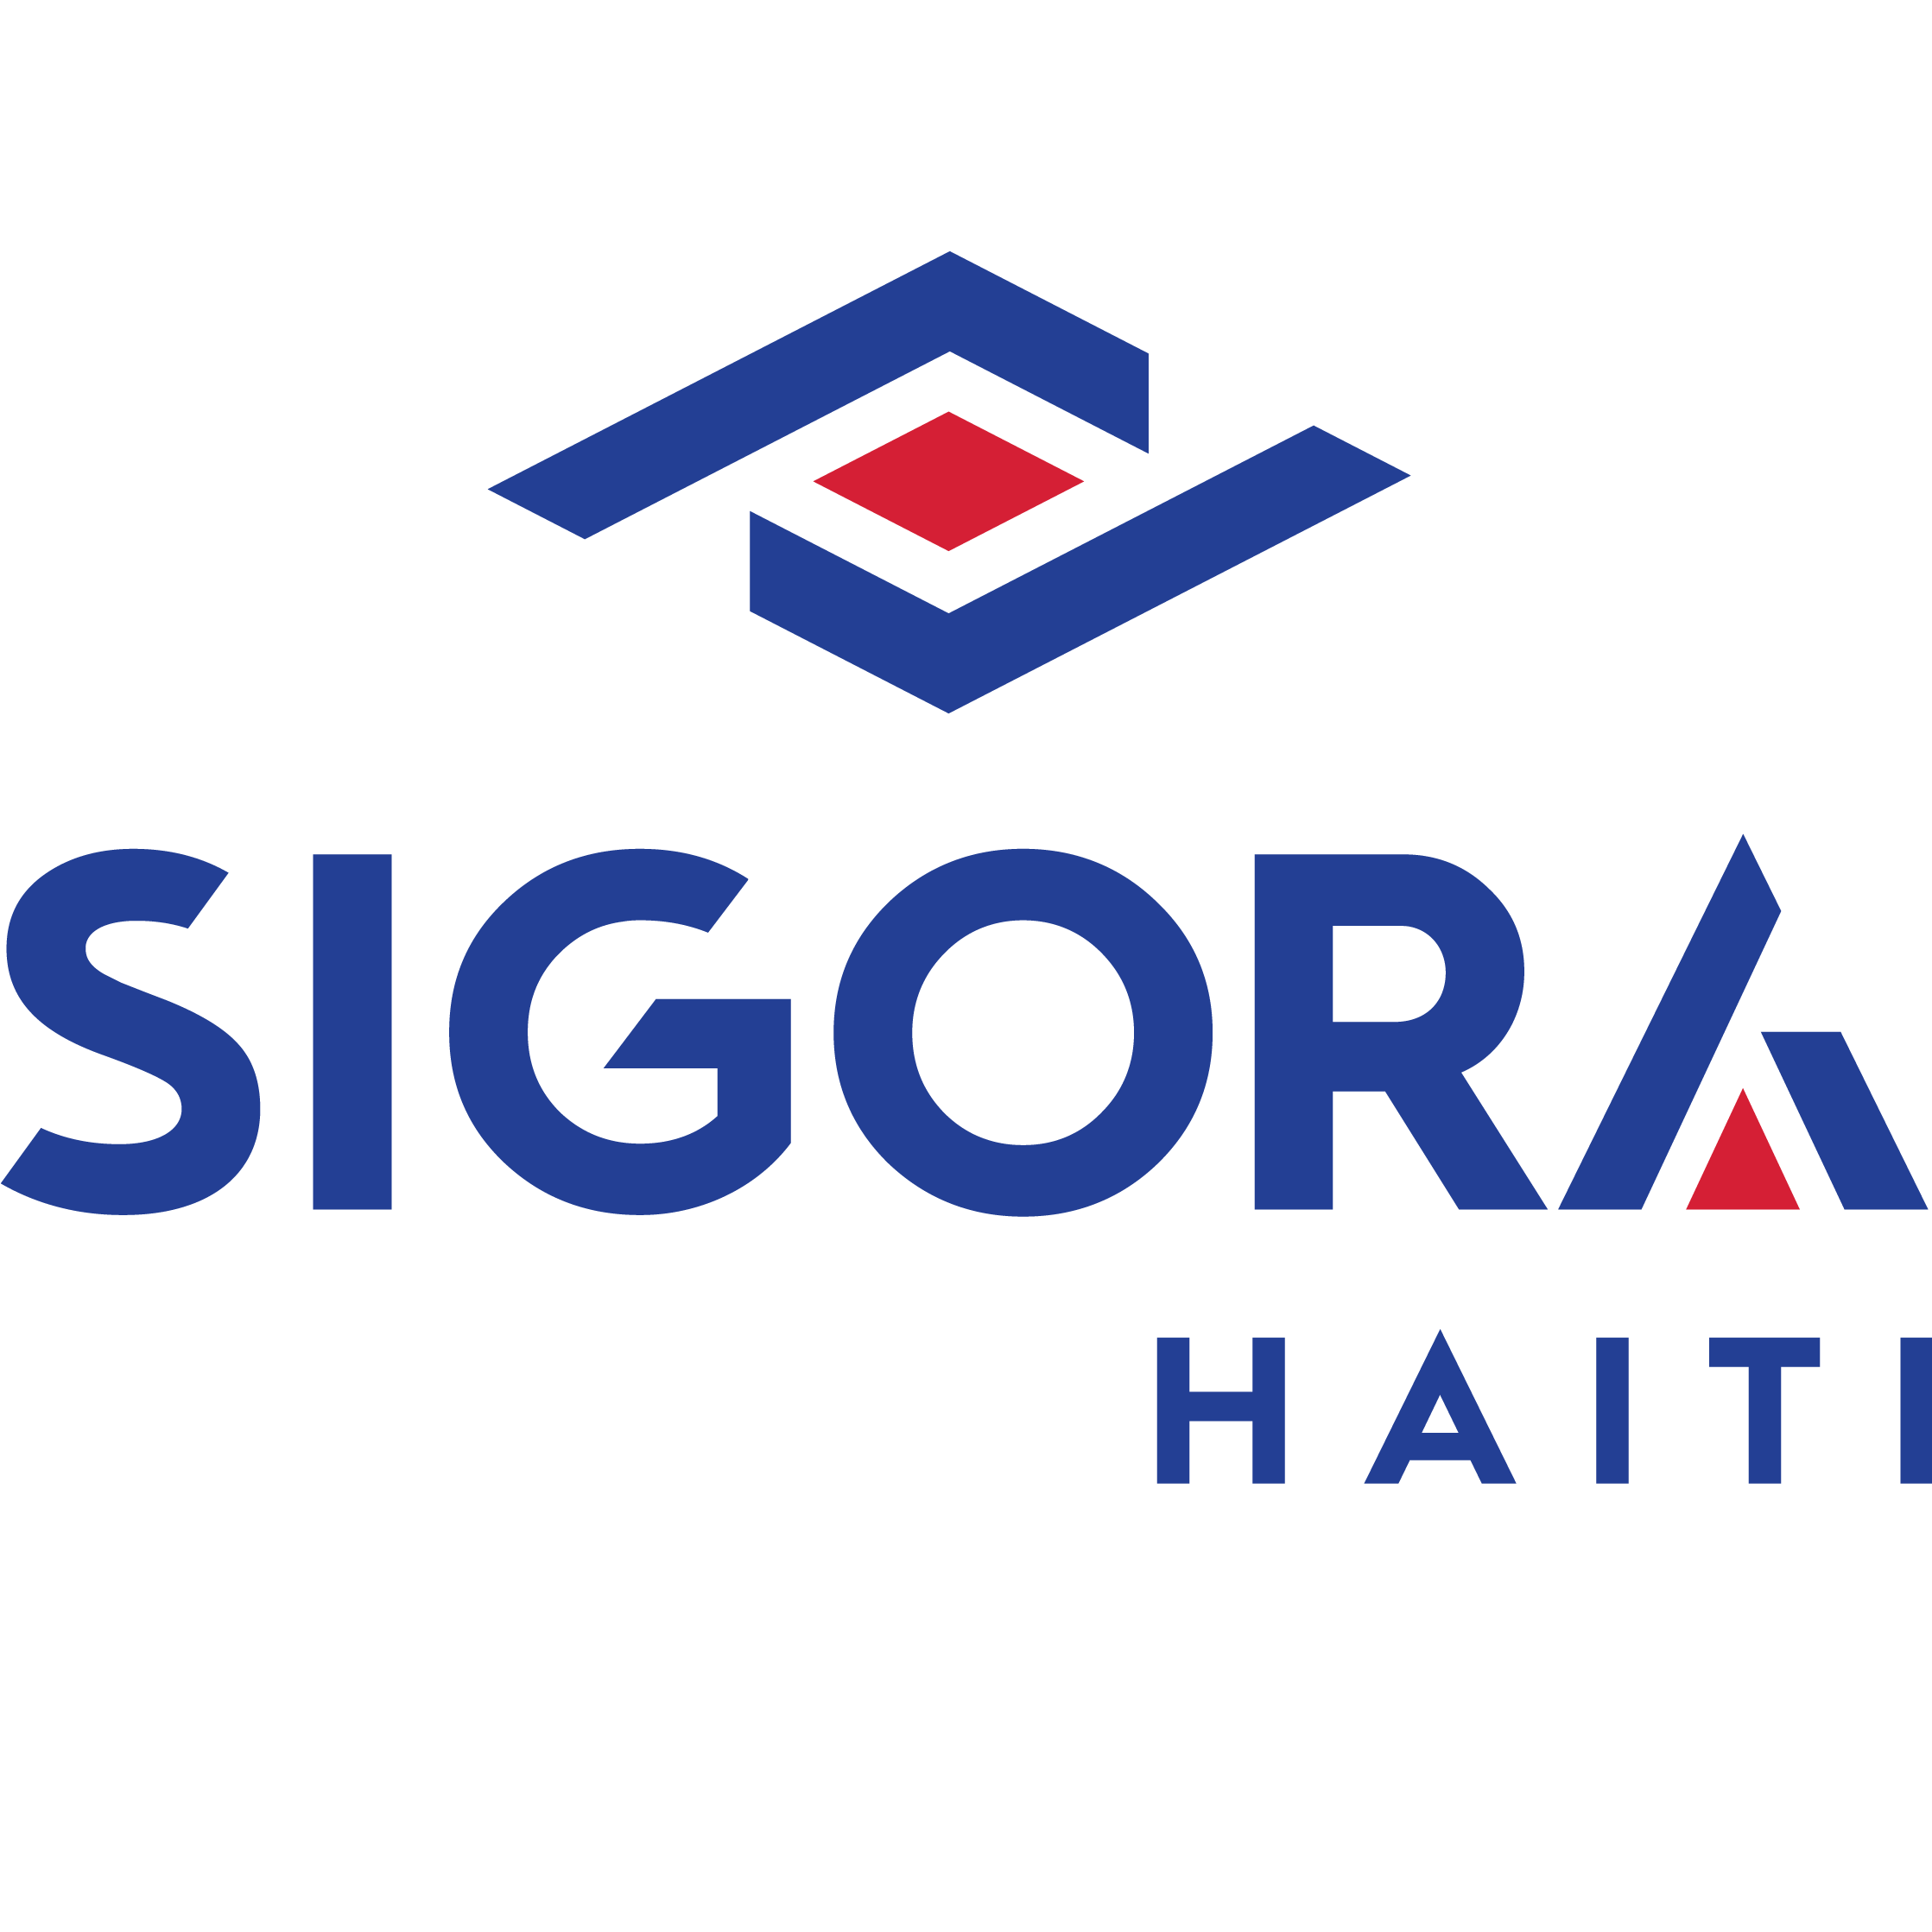 Sigora Haiti